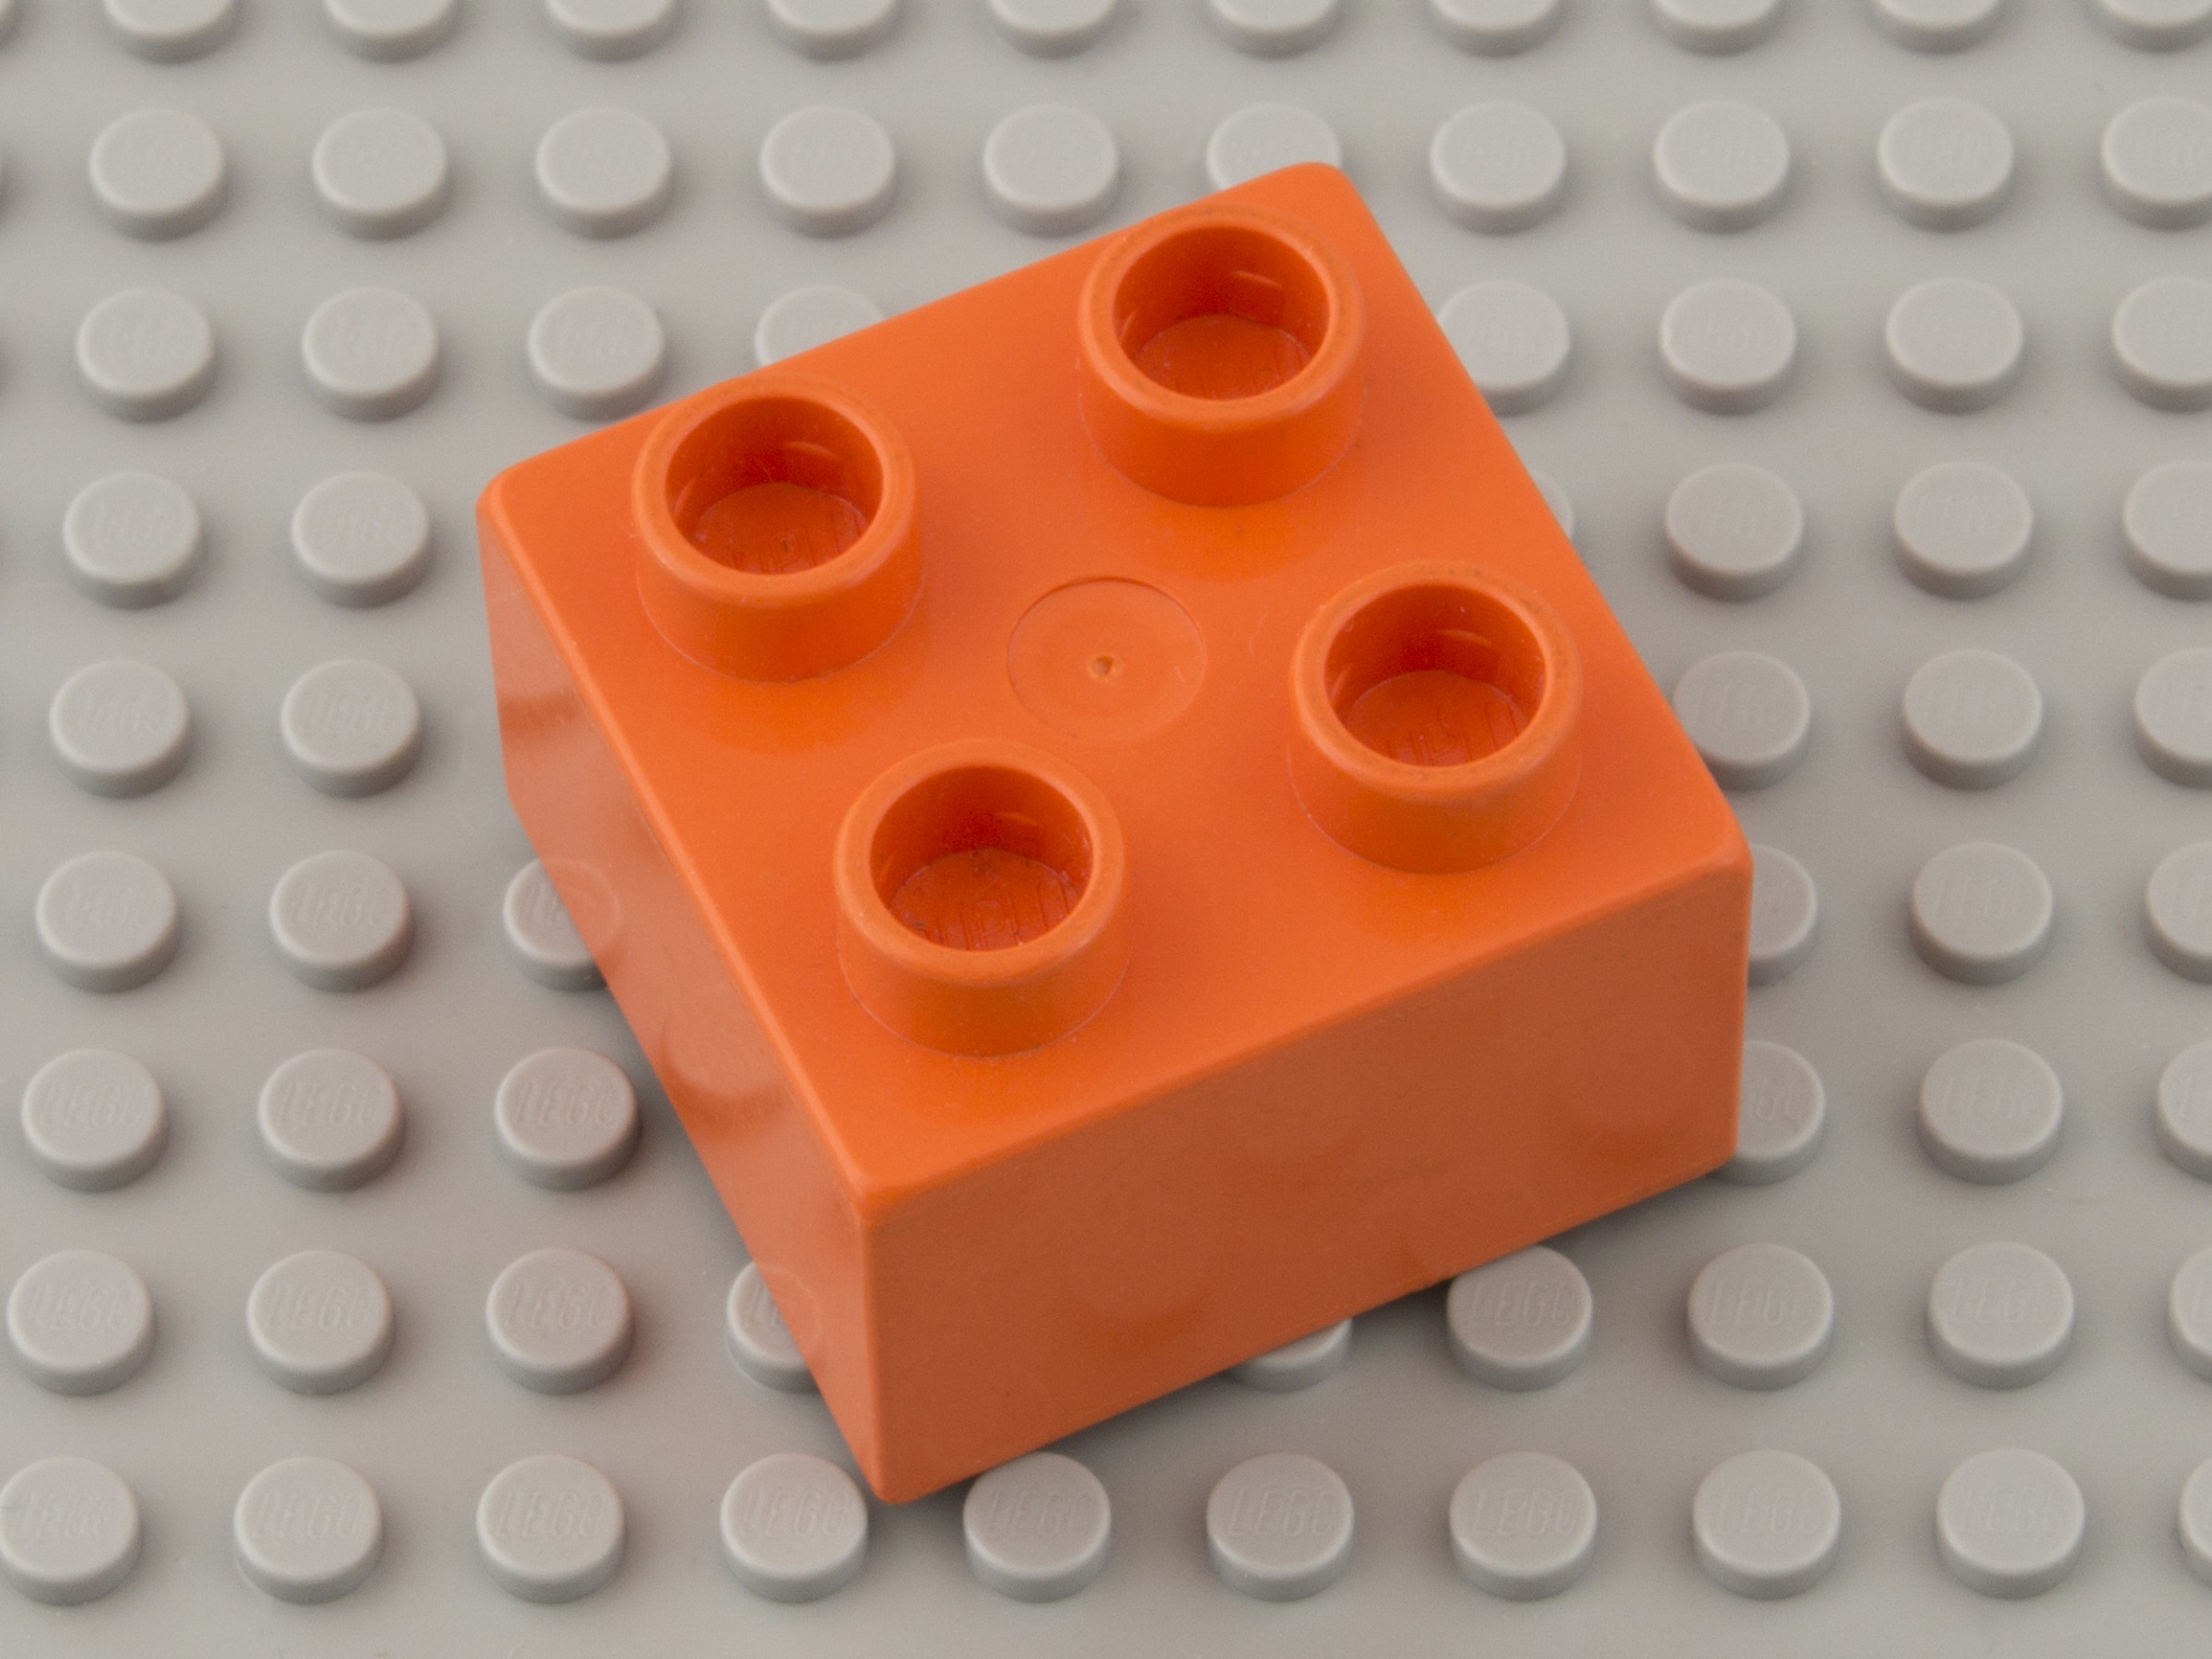 Orange-brown | Brickset: LEGO database